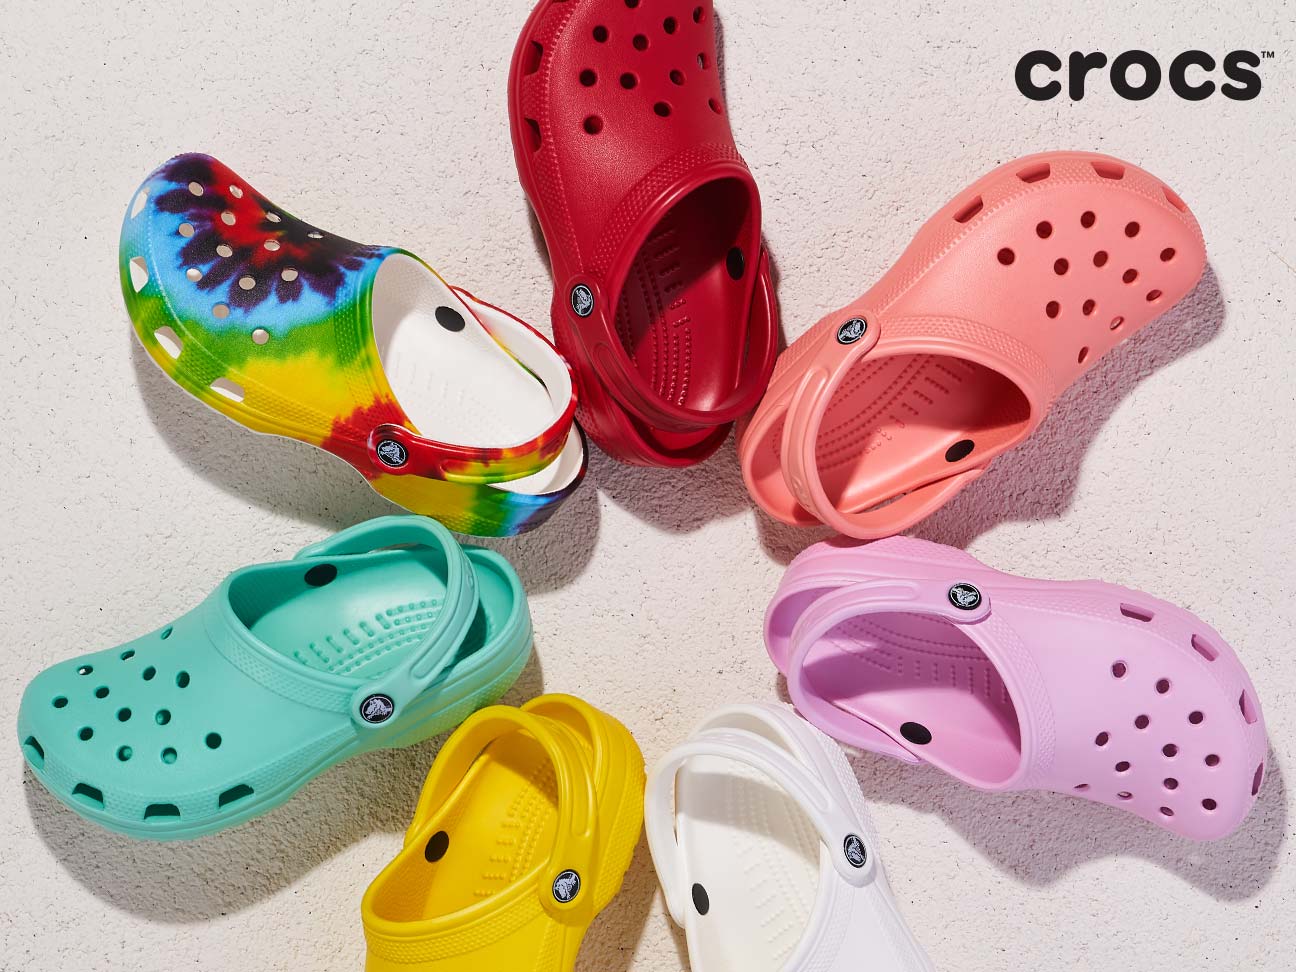 where can i buy crocs shoes near me